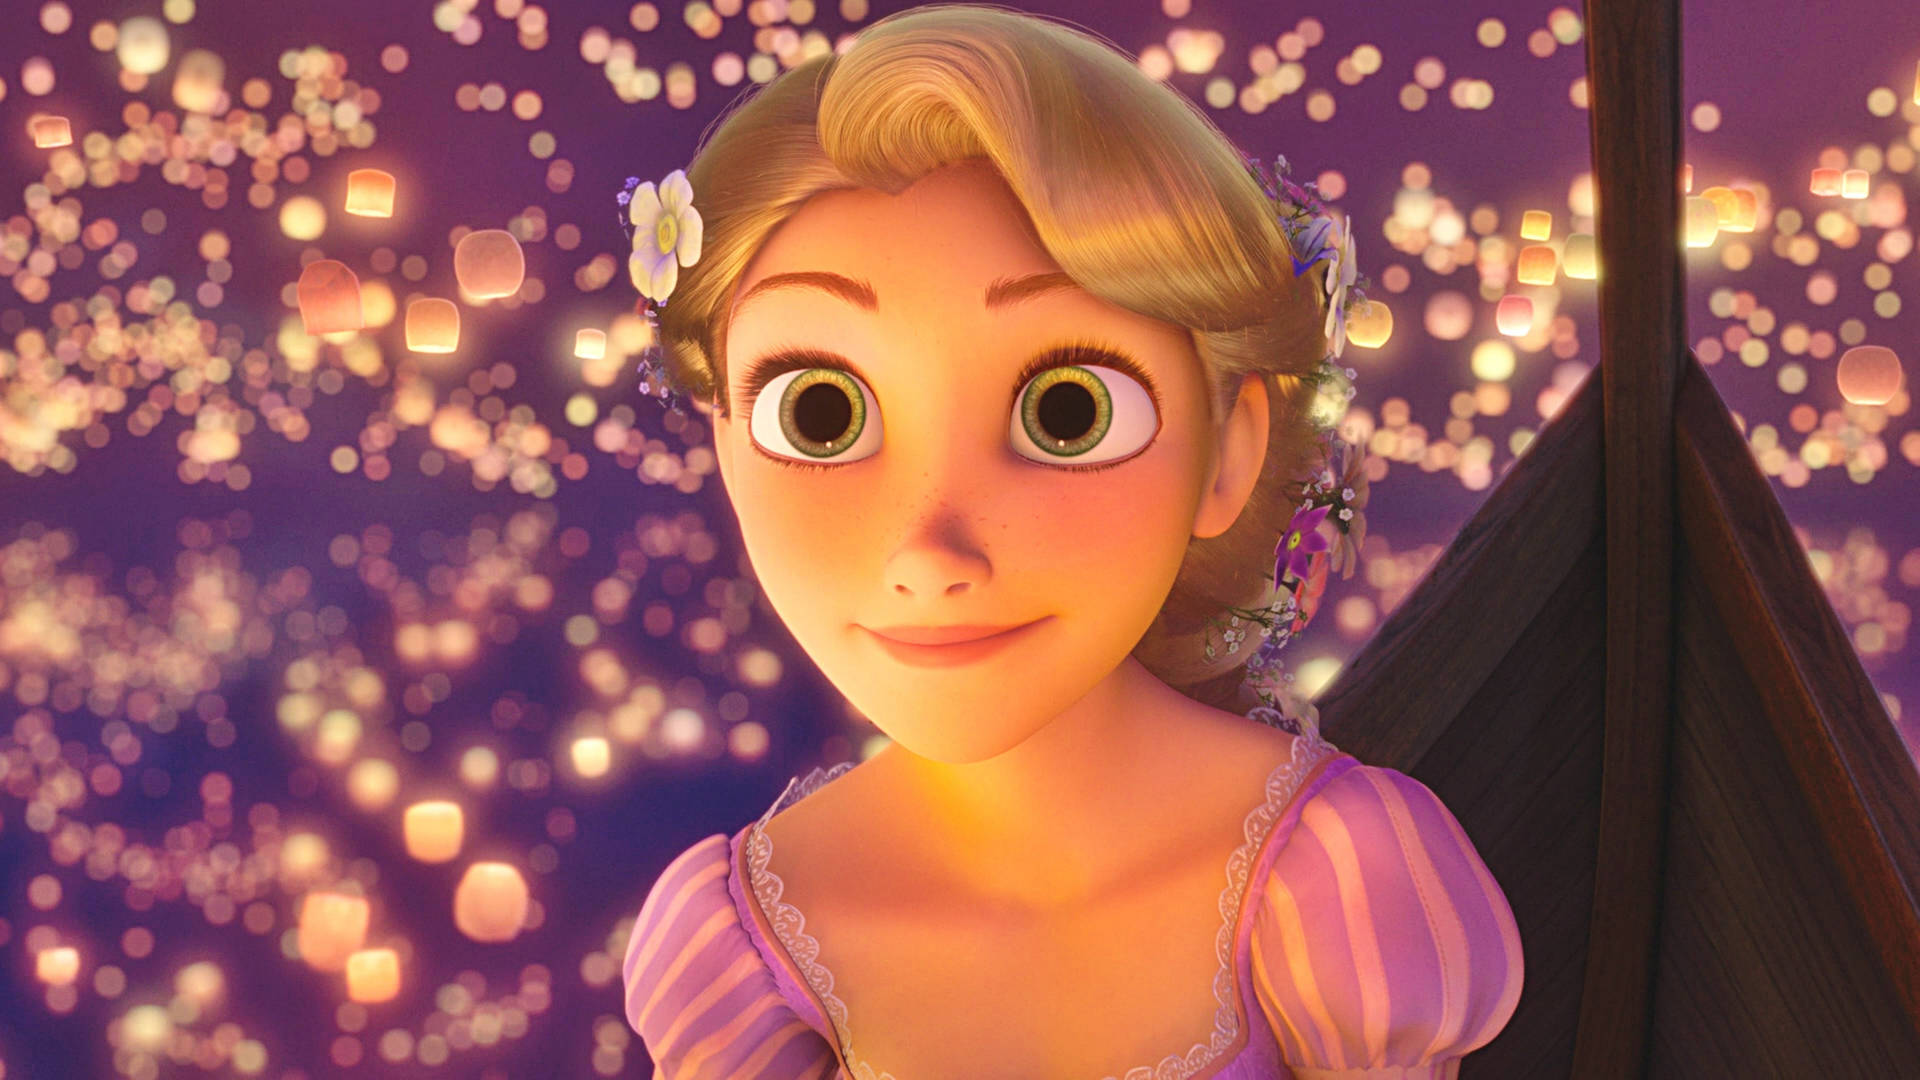 Disney Princess Rapunzel With Lanterns